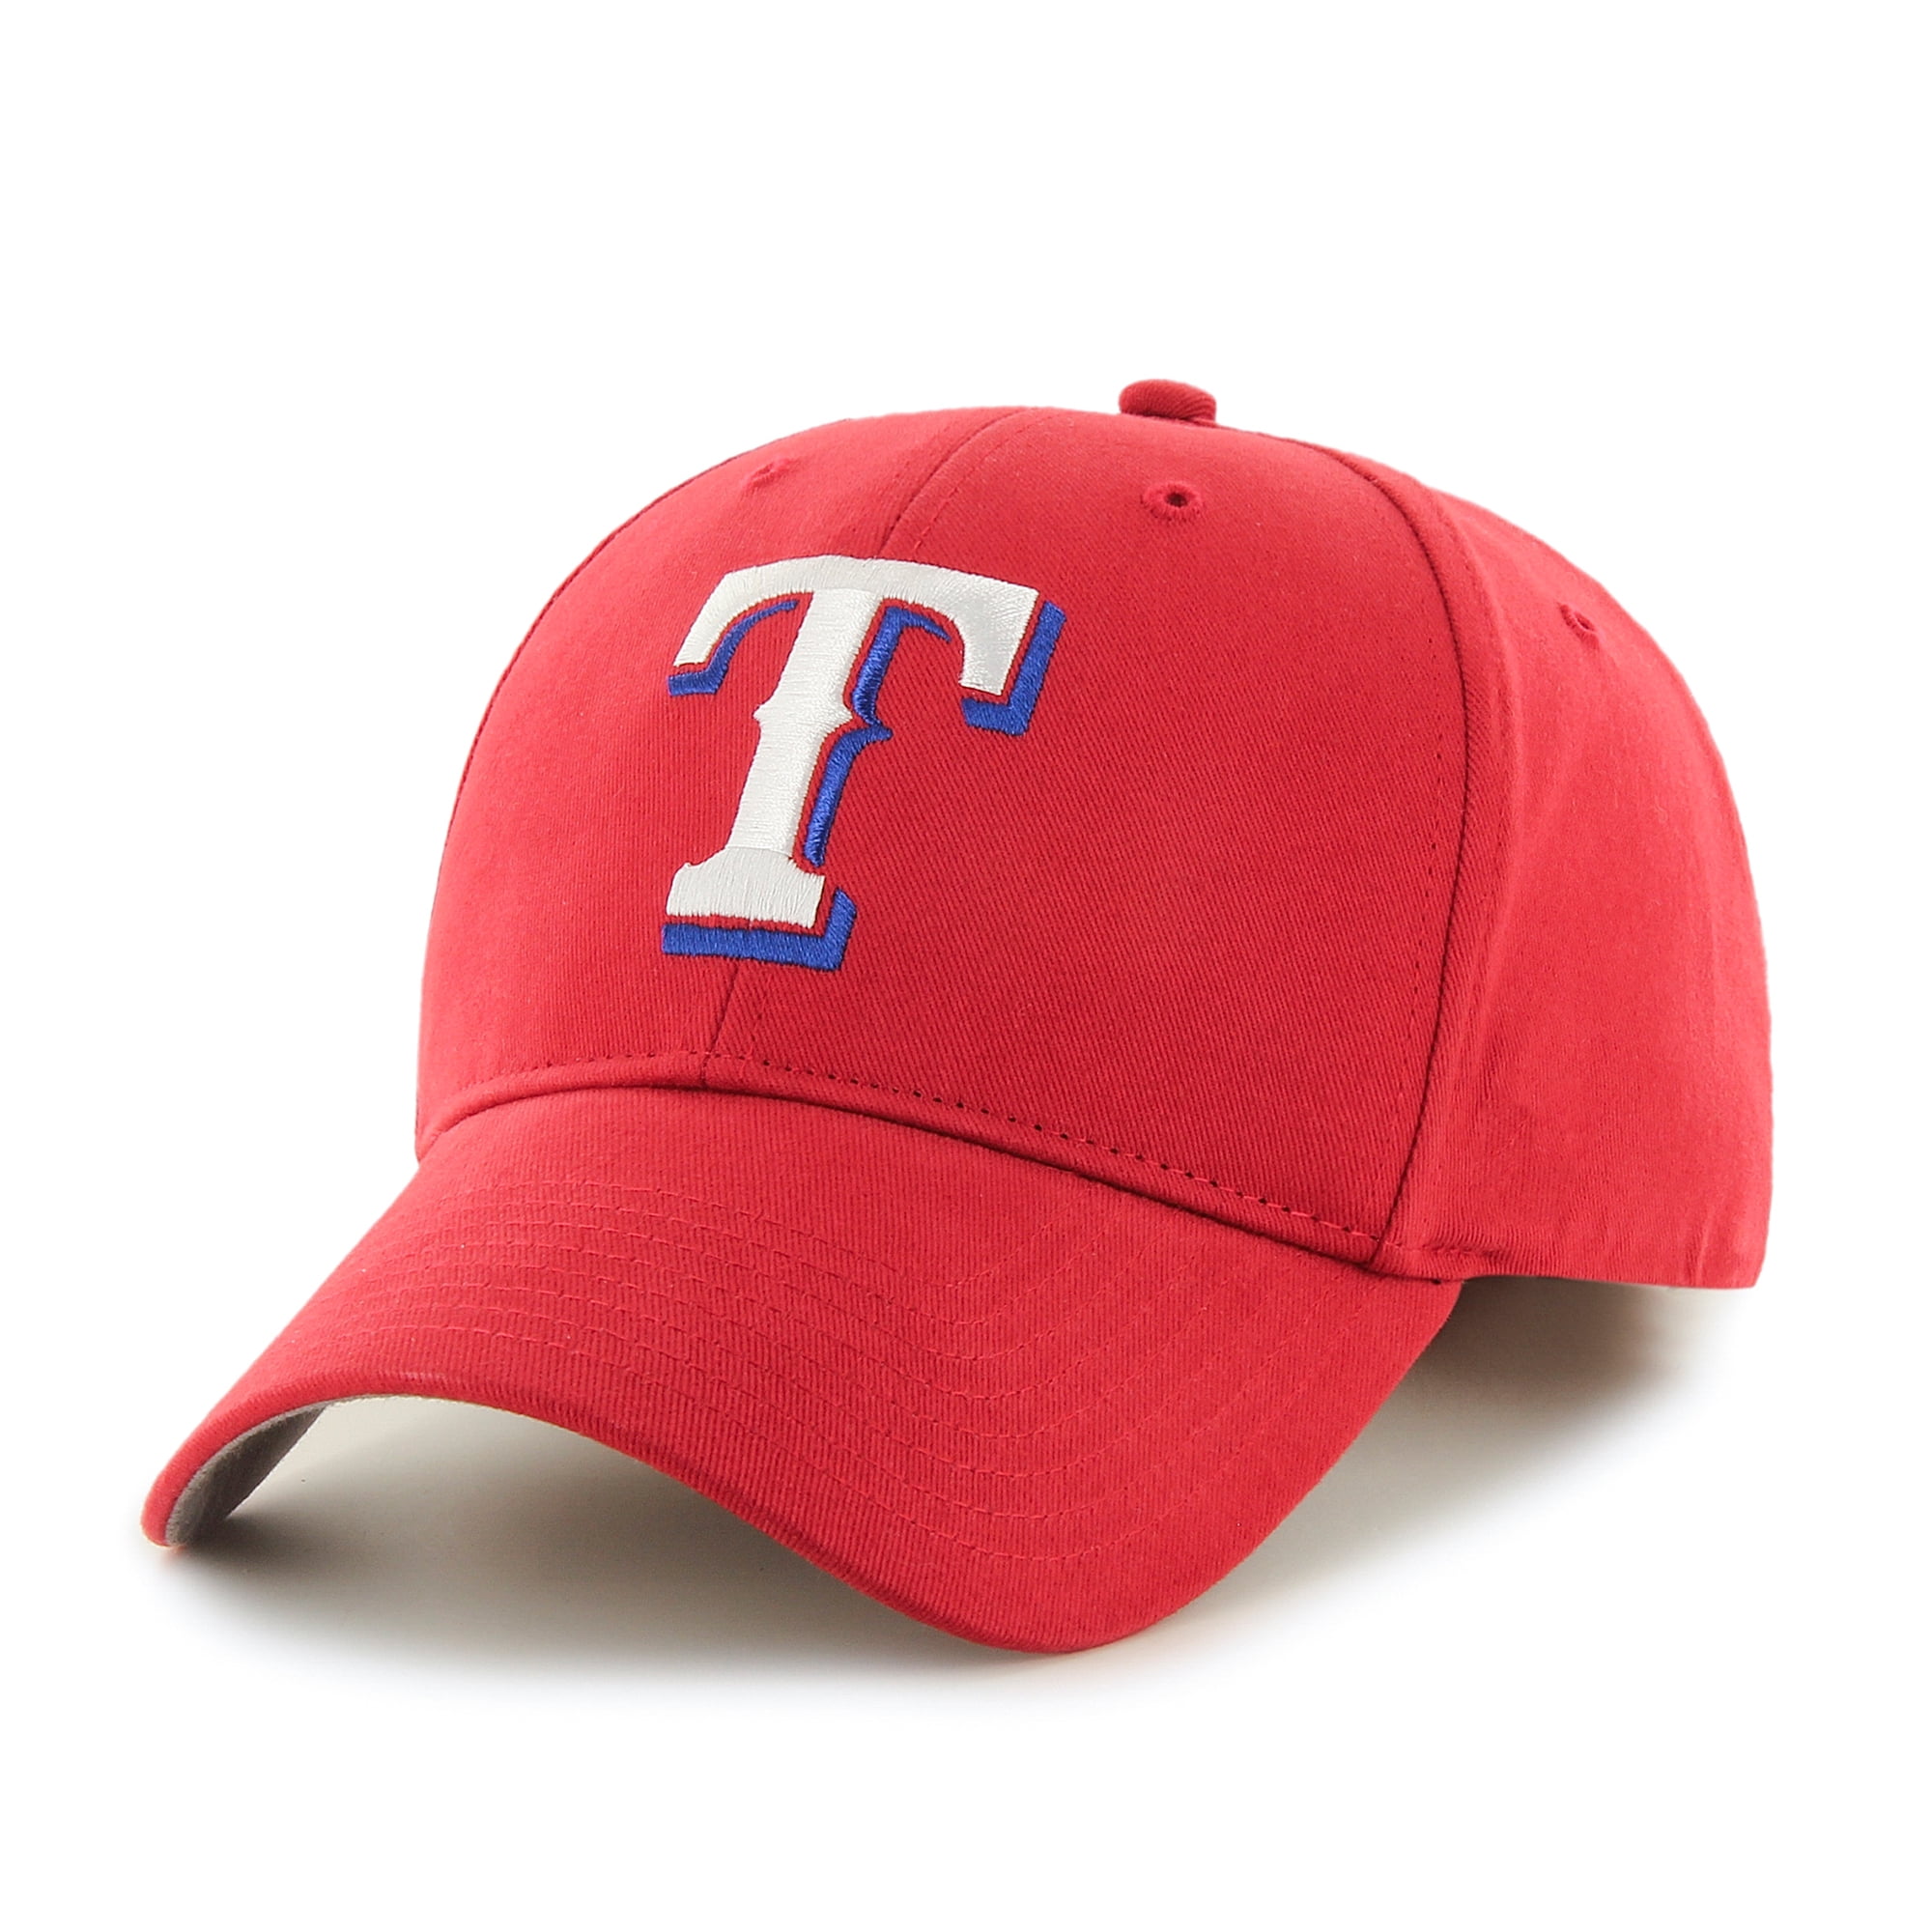 MLB Texas Rangers Reverse Basic Adjustable Cap/Hat by Fan Favorite 